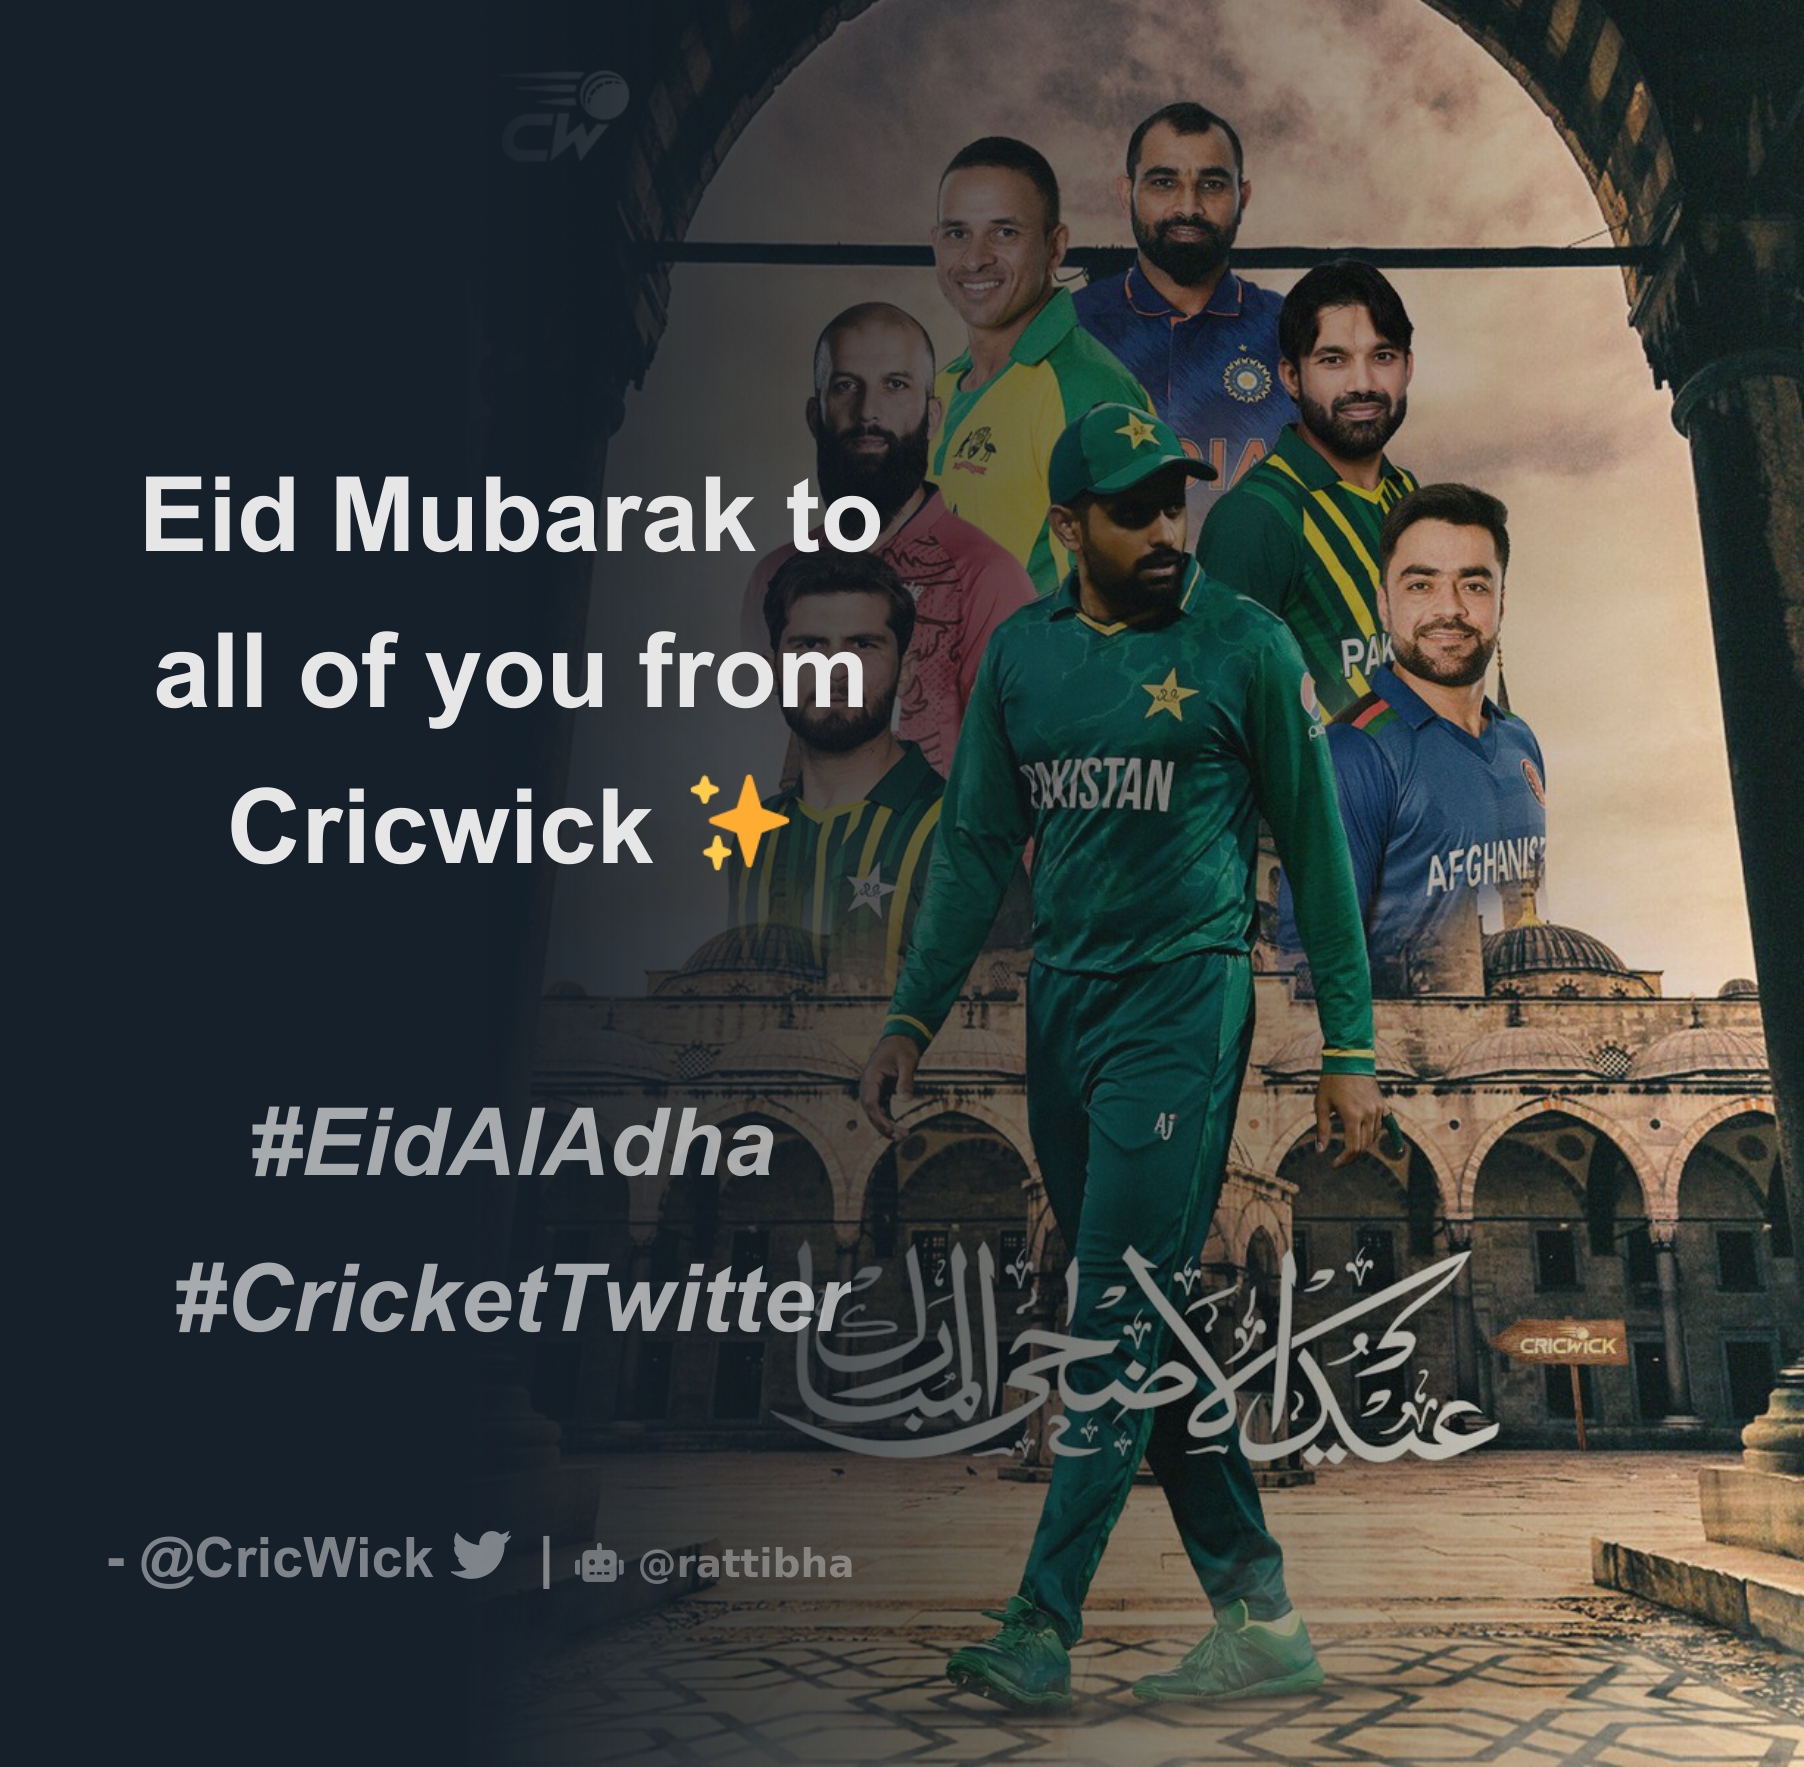 Eid Mubarak to all of you from Cricwick ✨ #EidAlAdha #CricketTwitter - Thread from CricWickCricWick